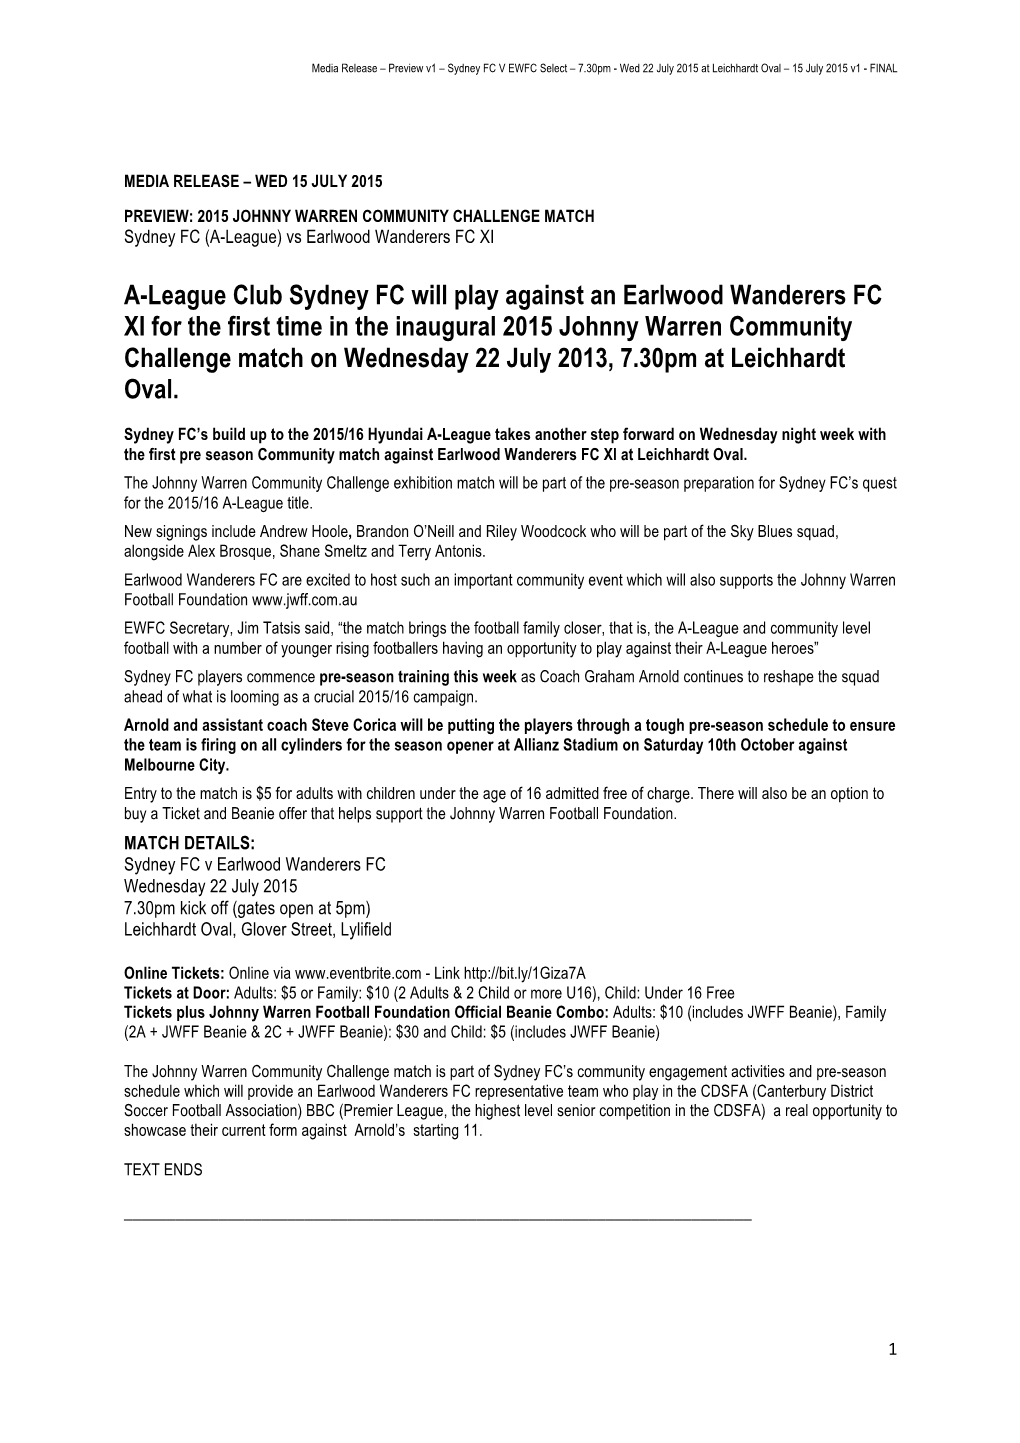 A-League Club Sydney FC Will Play Against an Earlwood Wanderers FC